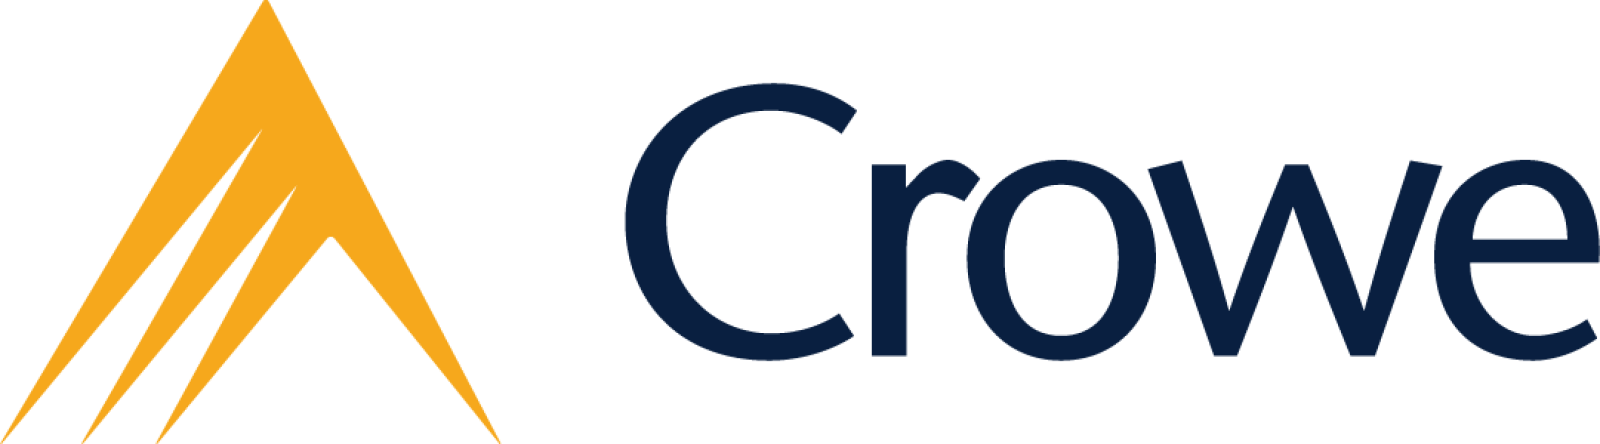 Logo Crowe Bompani SpA